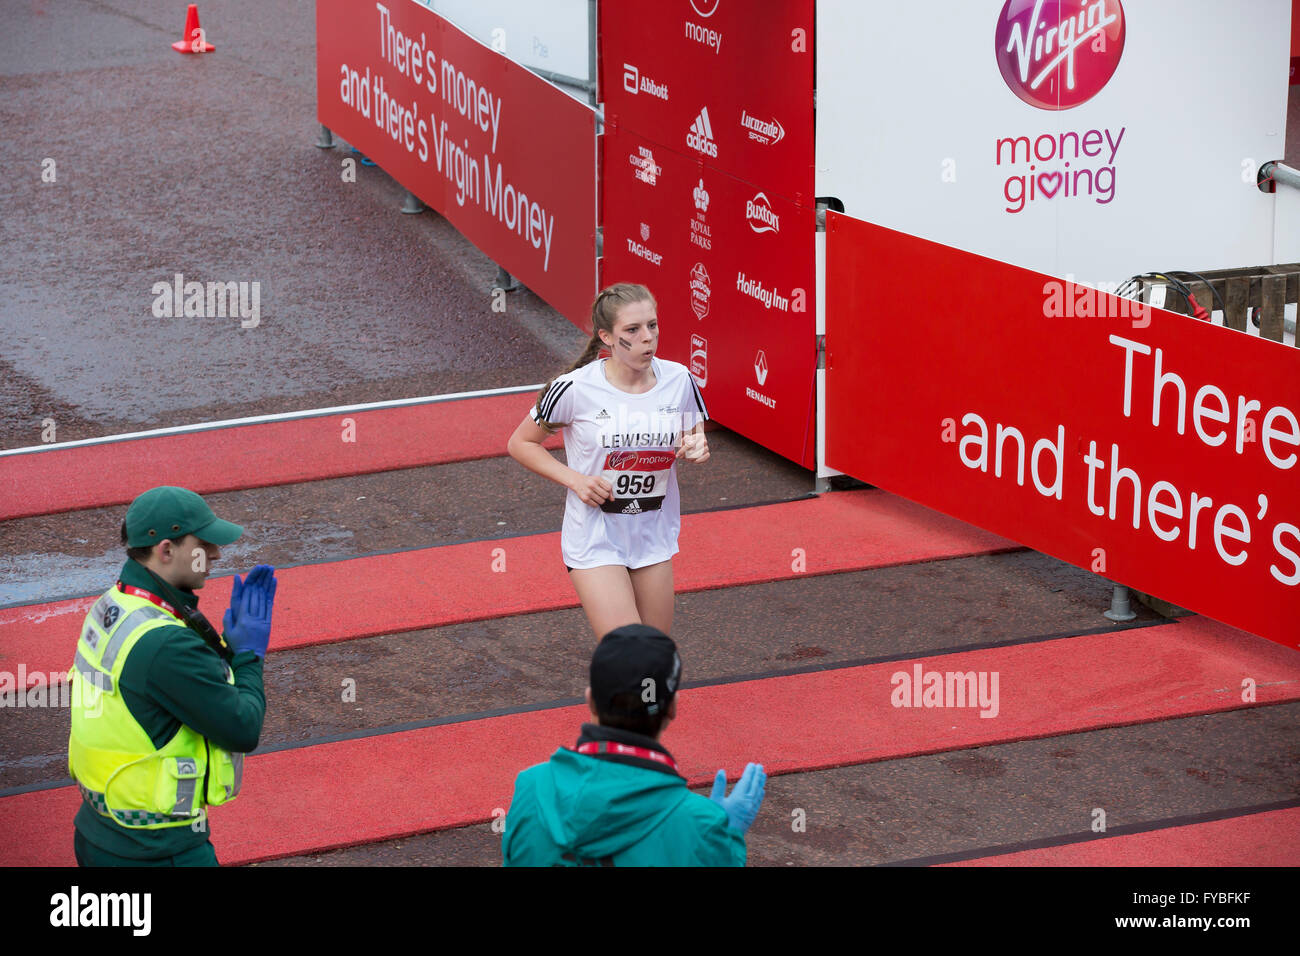 The Mall,London,UK,24th April 2016,Paige Macheath finishes the Virgin Money Giving Mini London Marathon 201 Credit: Keith Larby/Alamy Live News Stock Photo